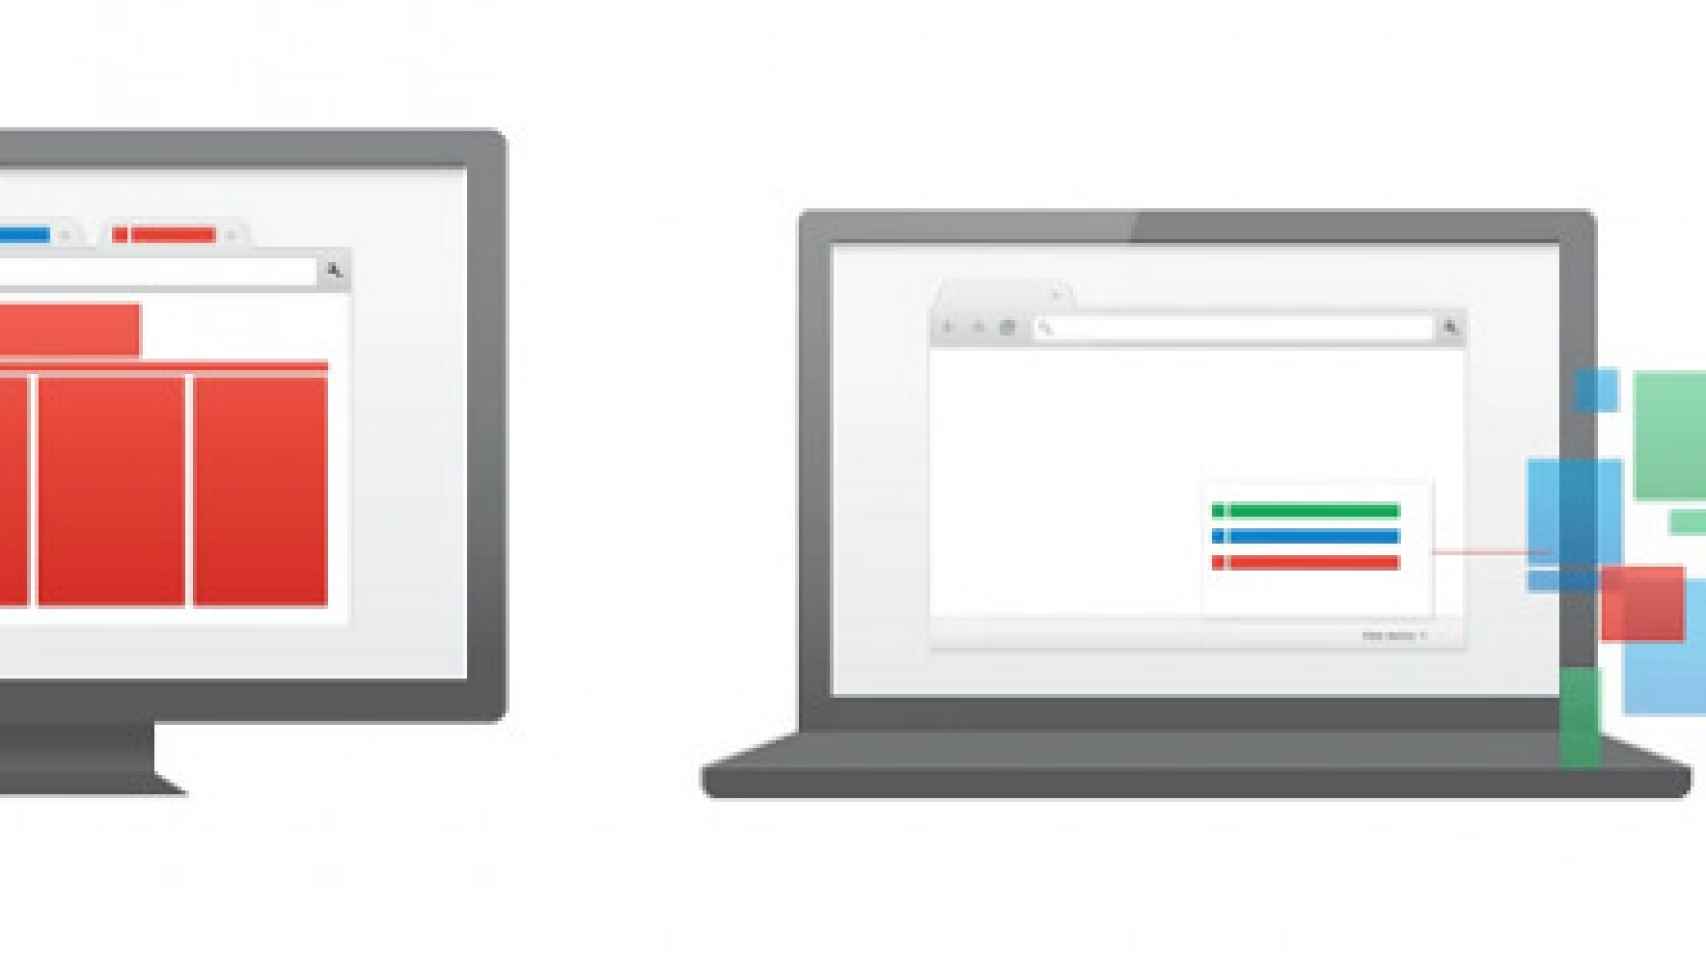 Sincronización de pestañas entre dispositivos con el nuevo Google Chrome 19